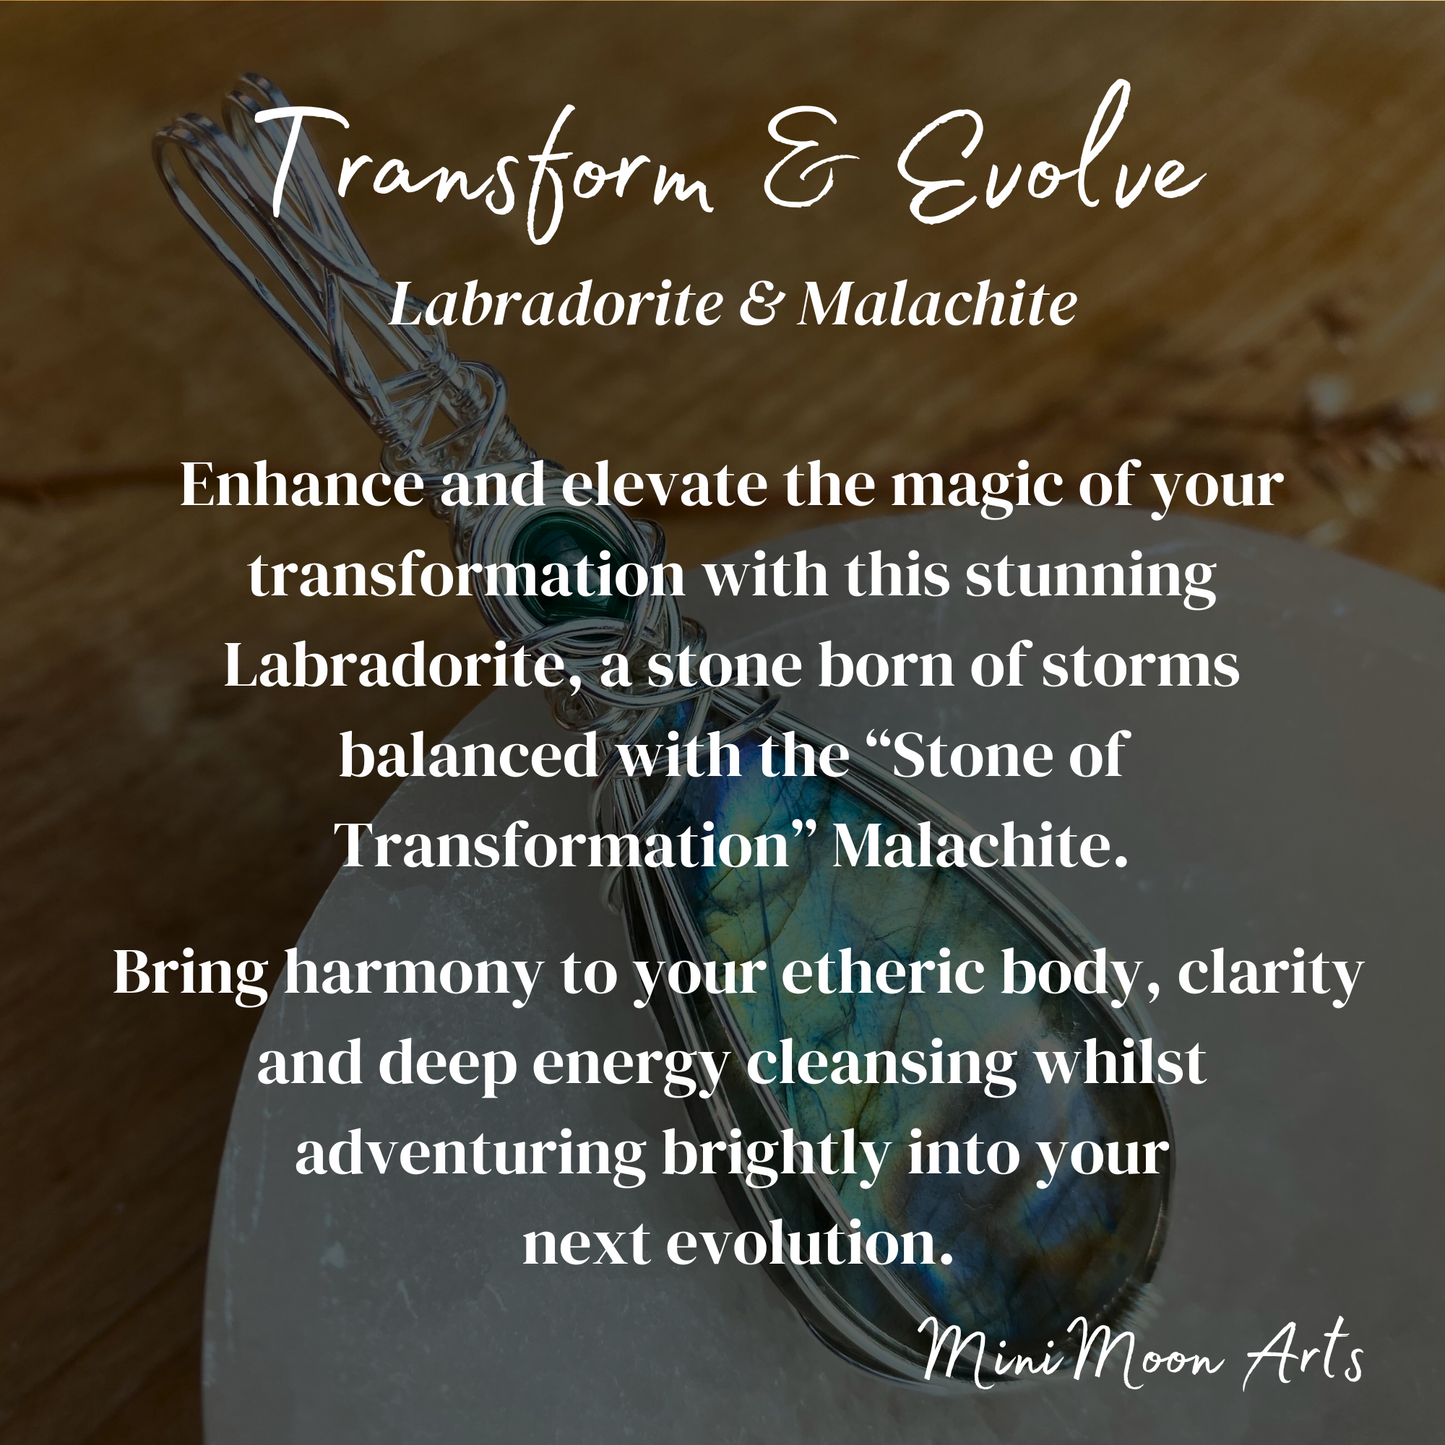 Transform and evolve Labradorite and malachite wire wrapped silver wire pendant info card